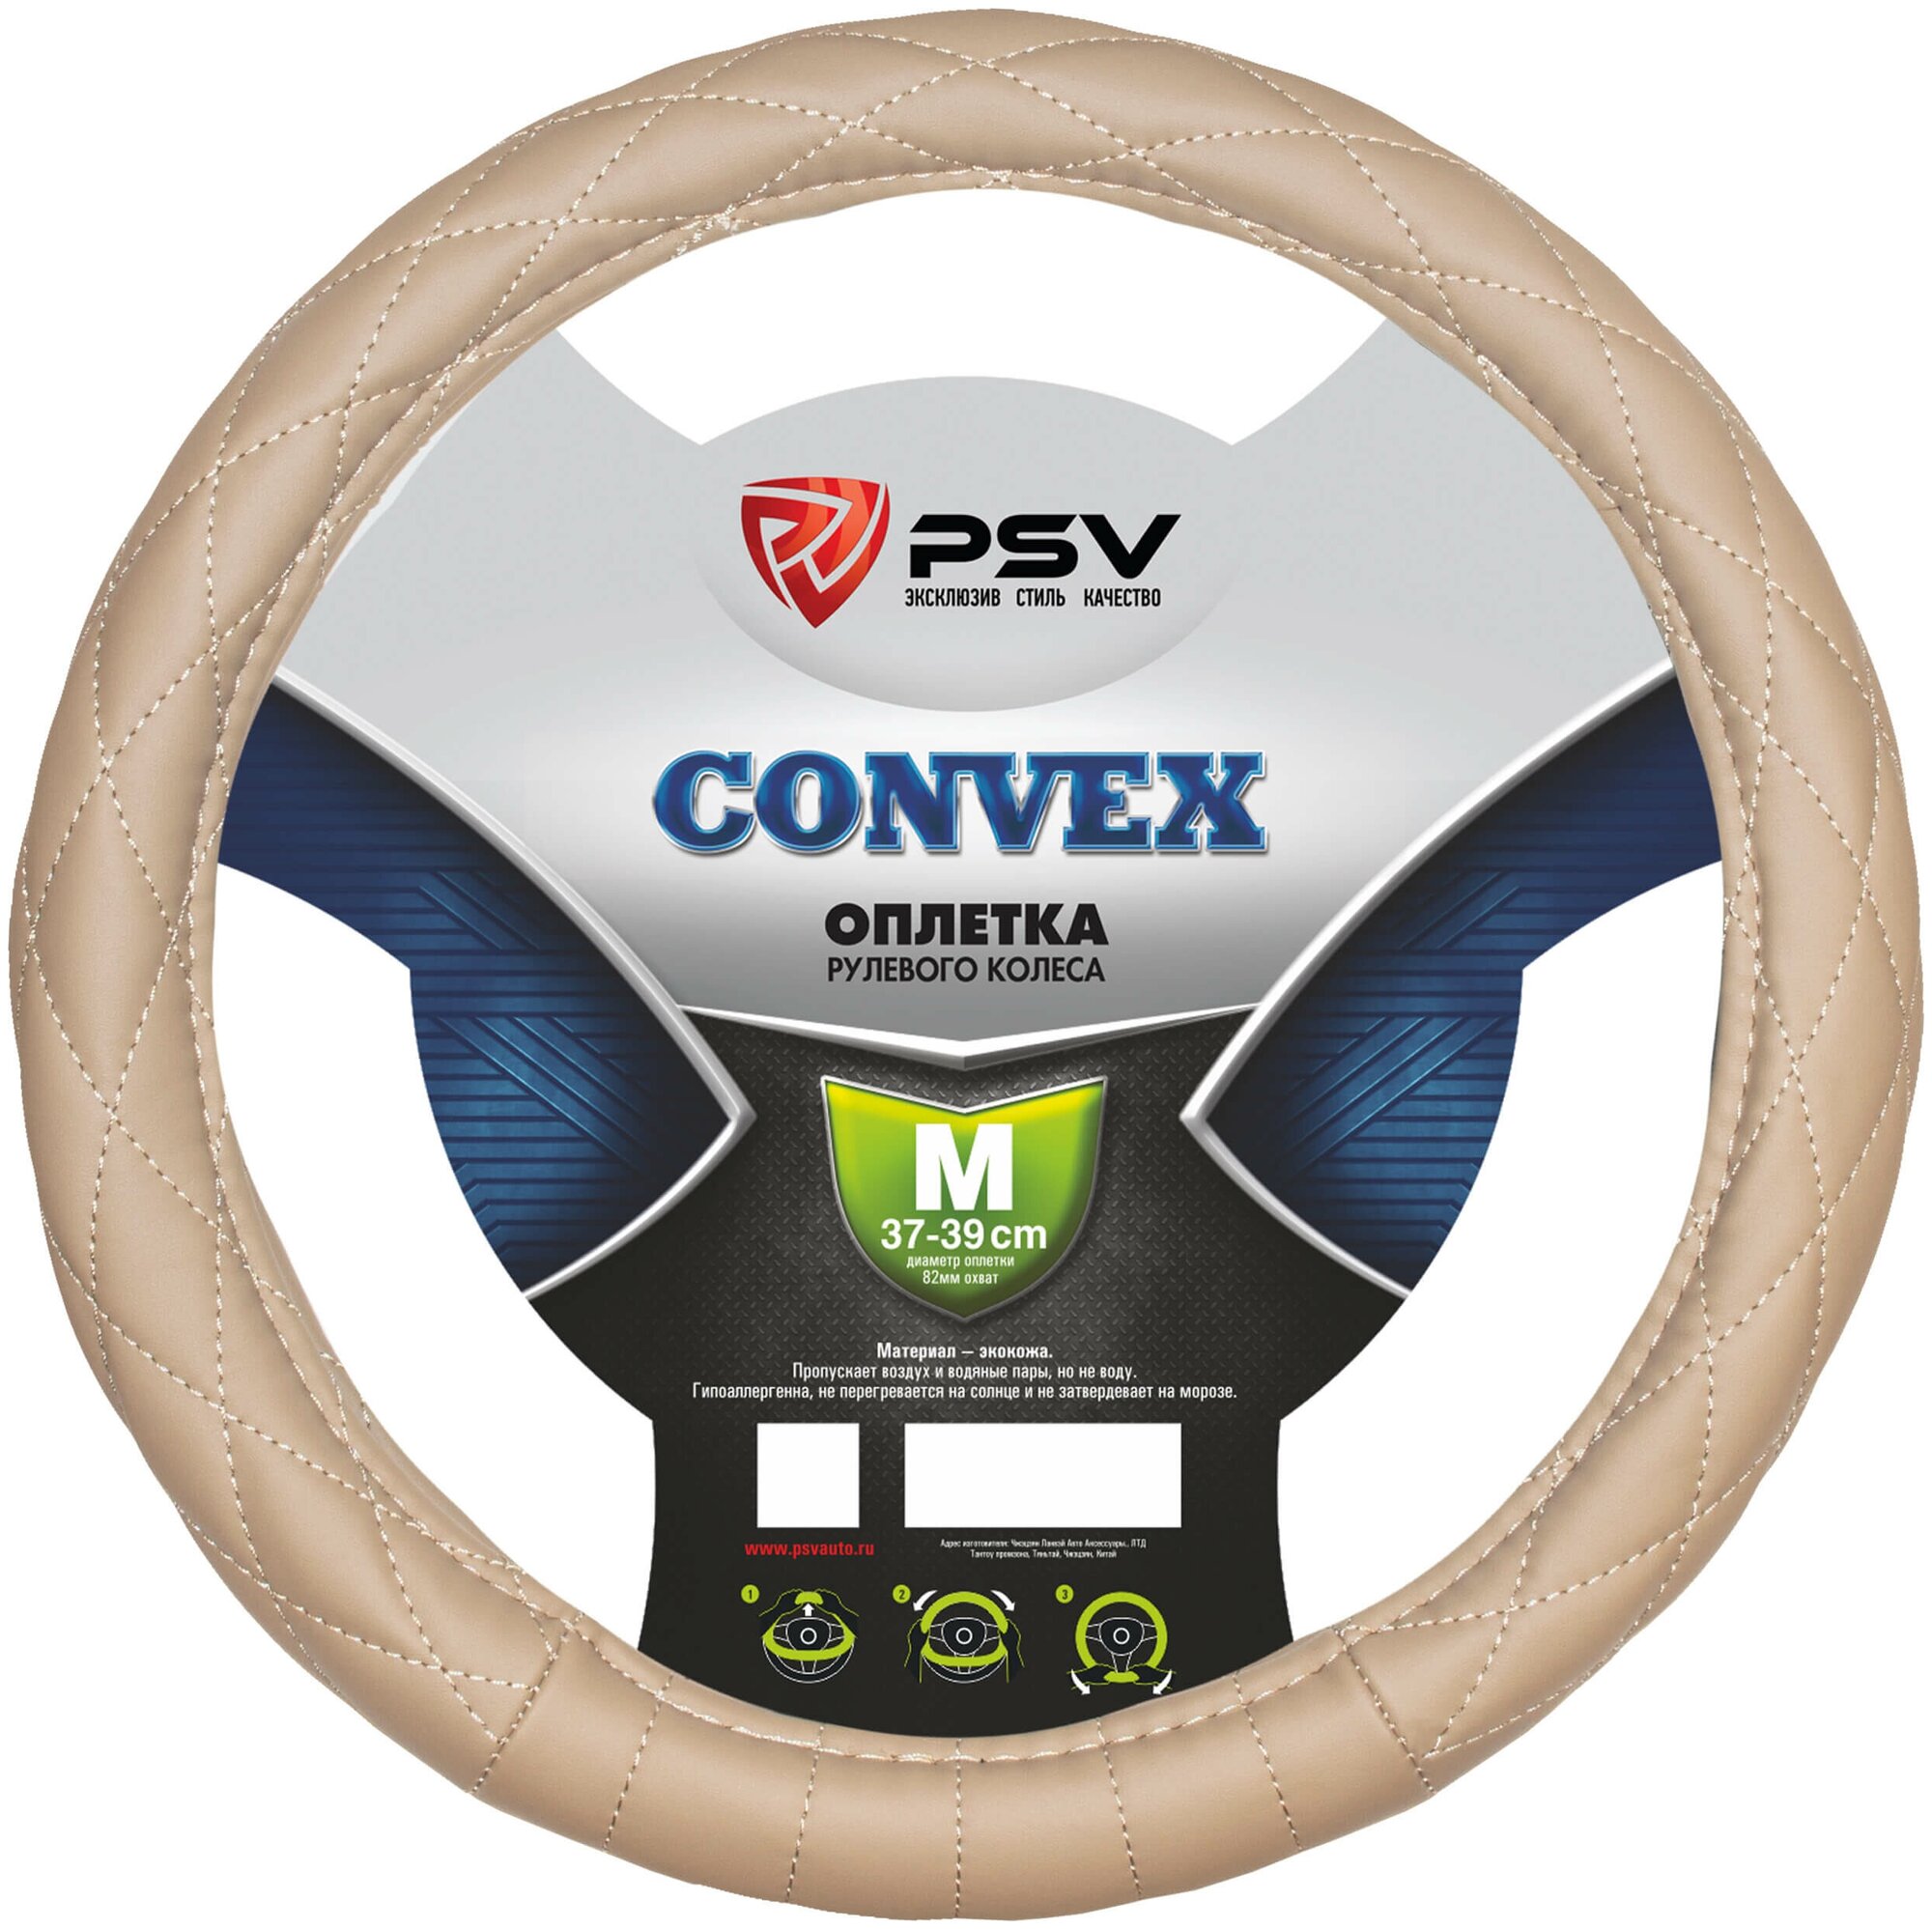 PSV CONVEX